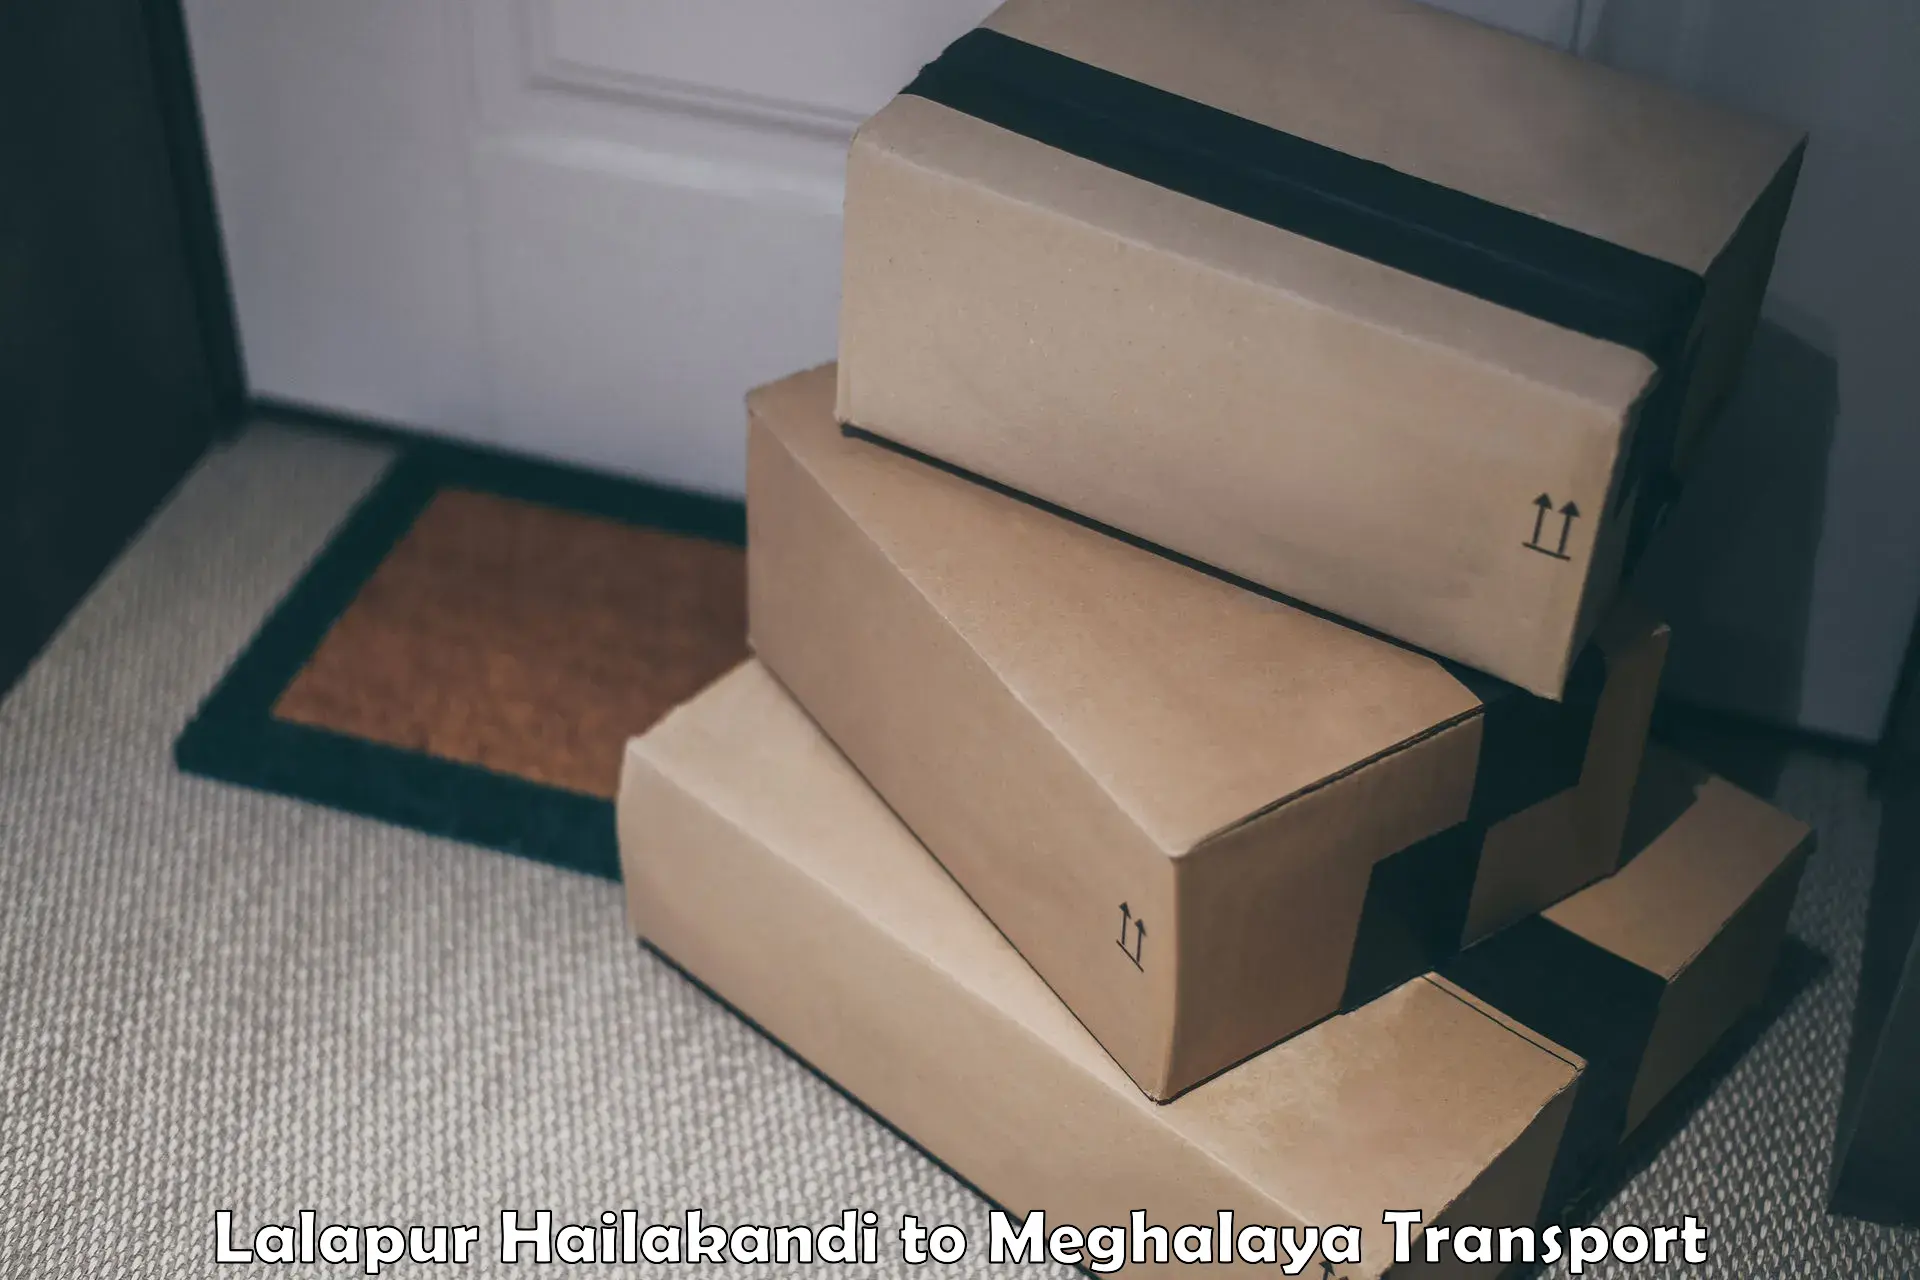 Delivery service Lalapur Hailakandi to Meghalaya